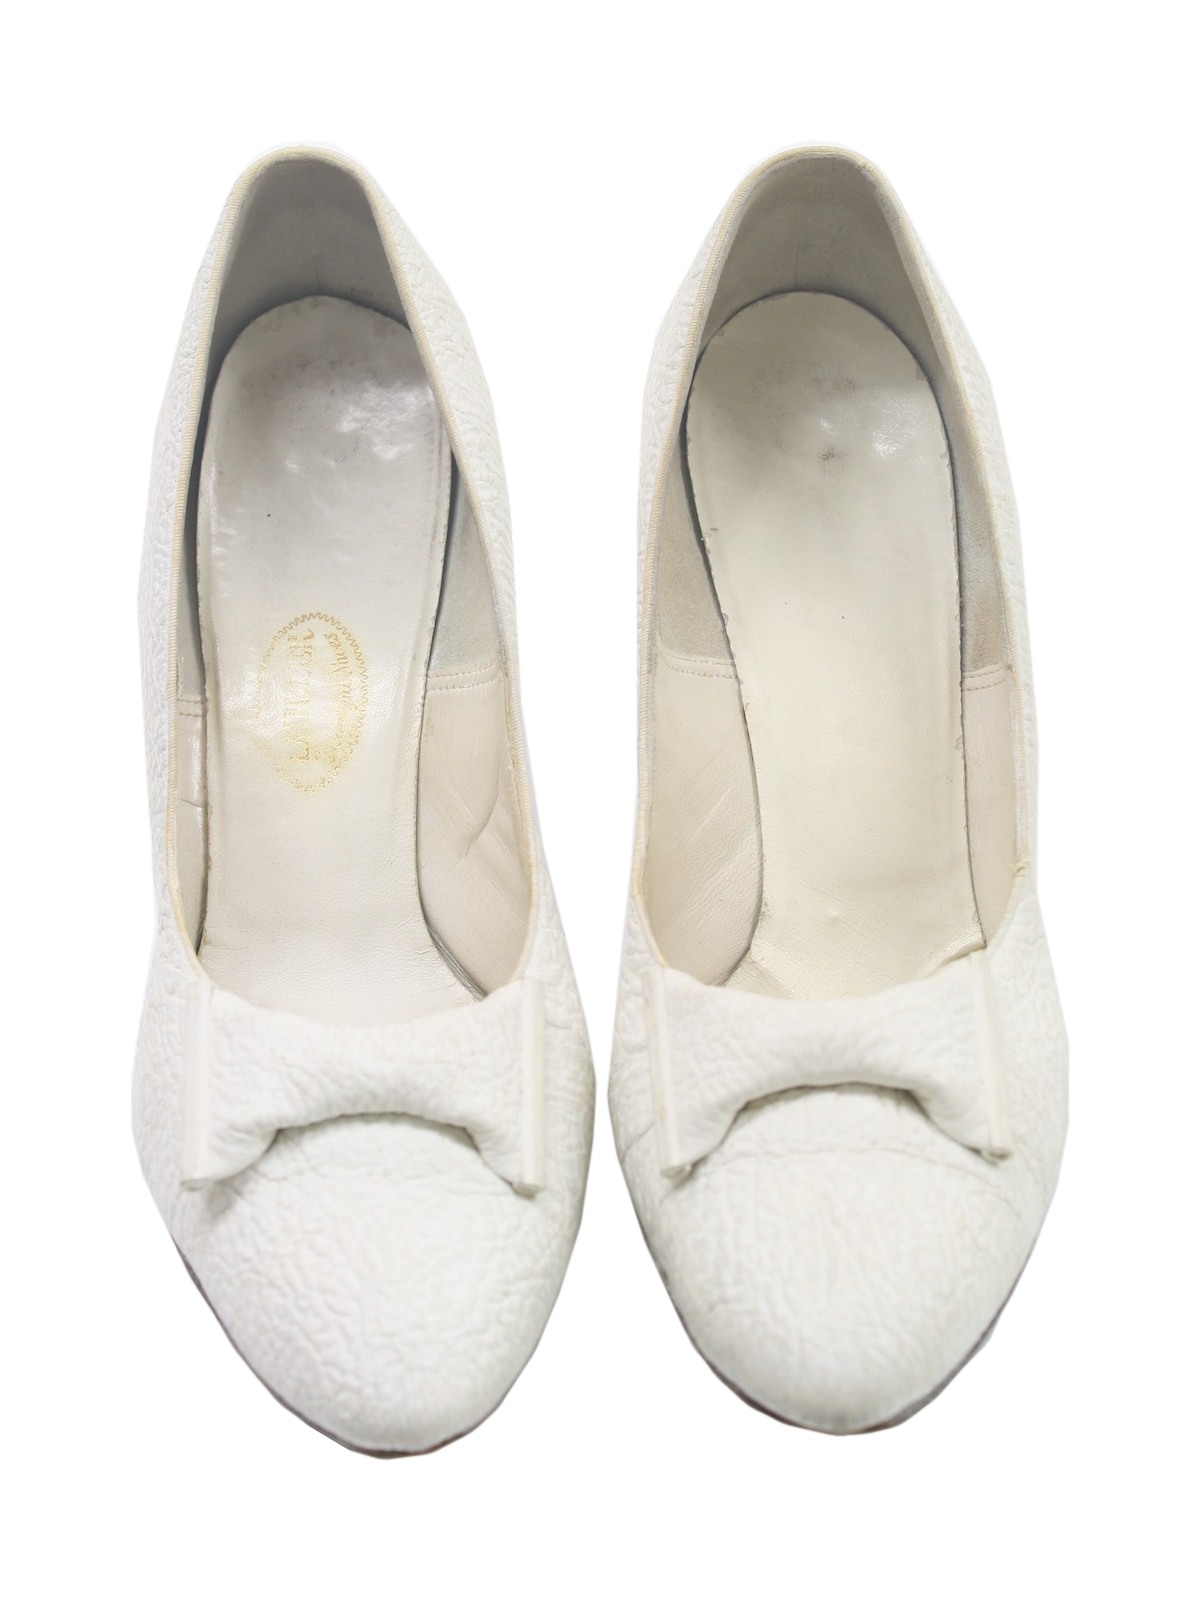 1950s white shoes - Gem